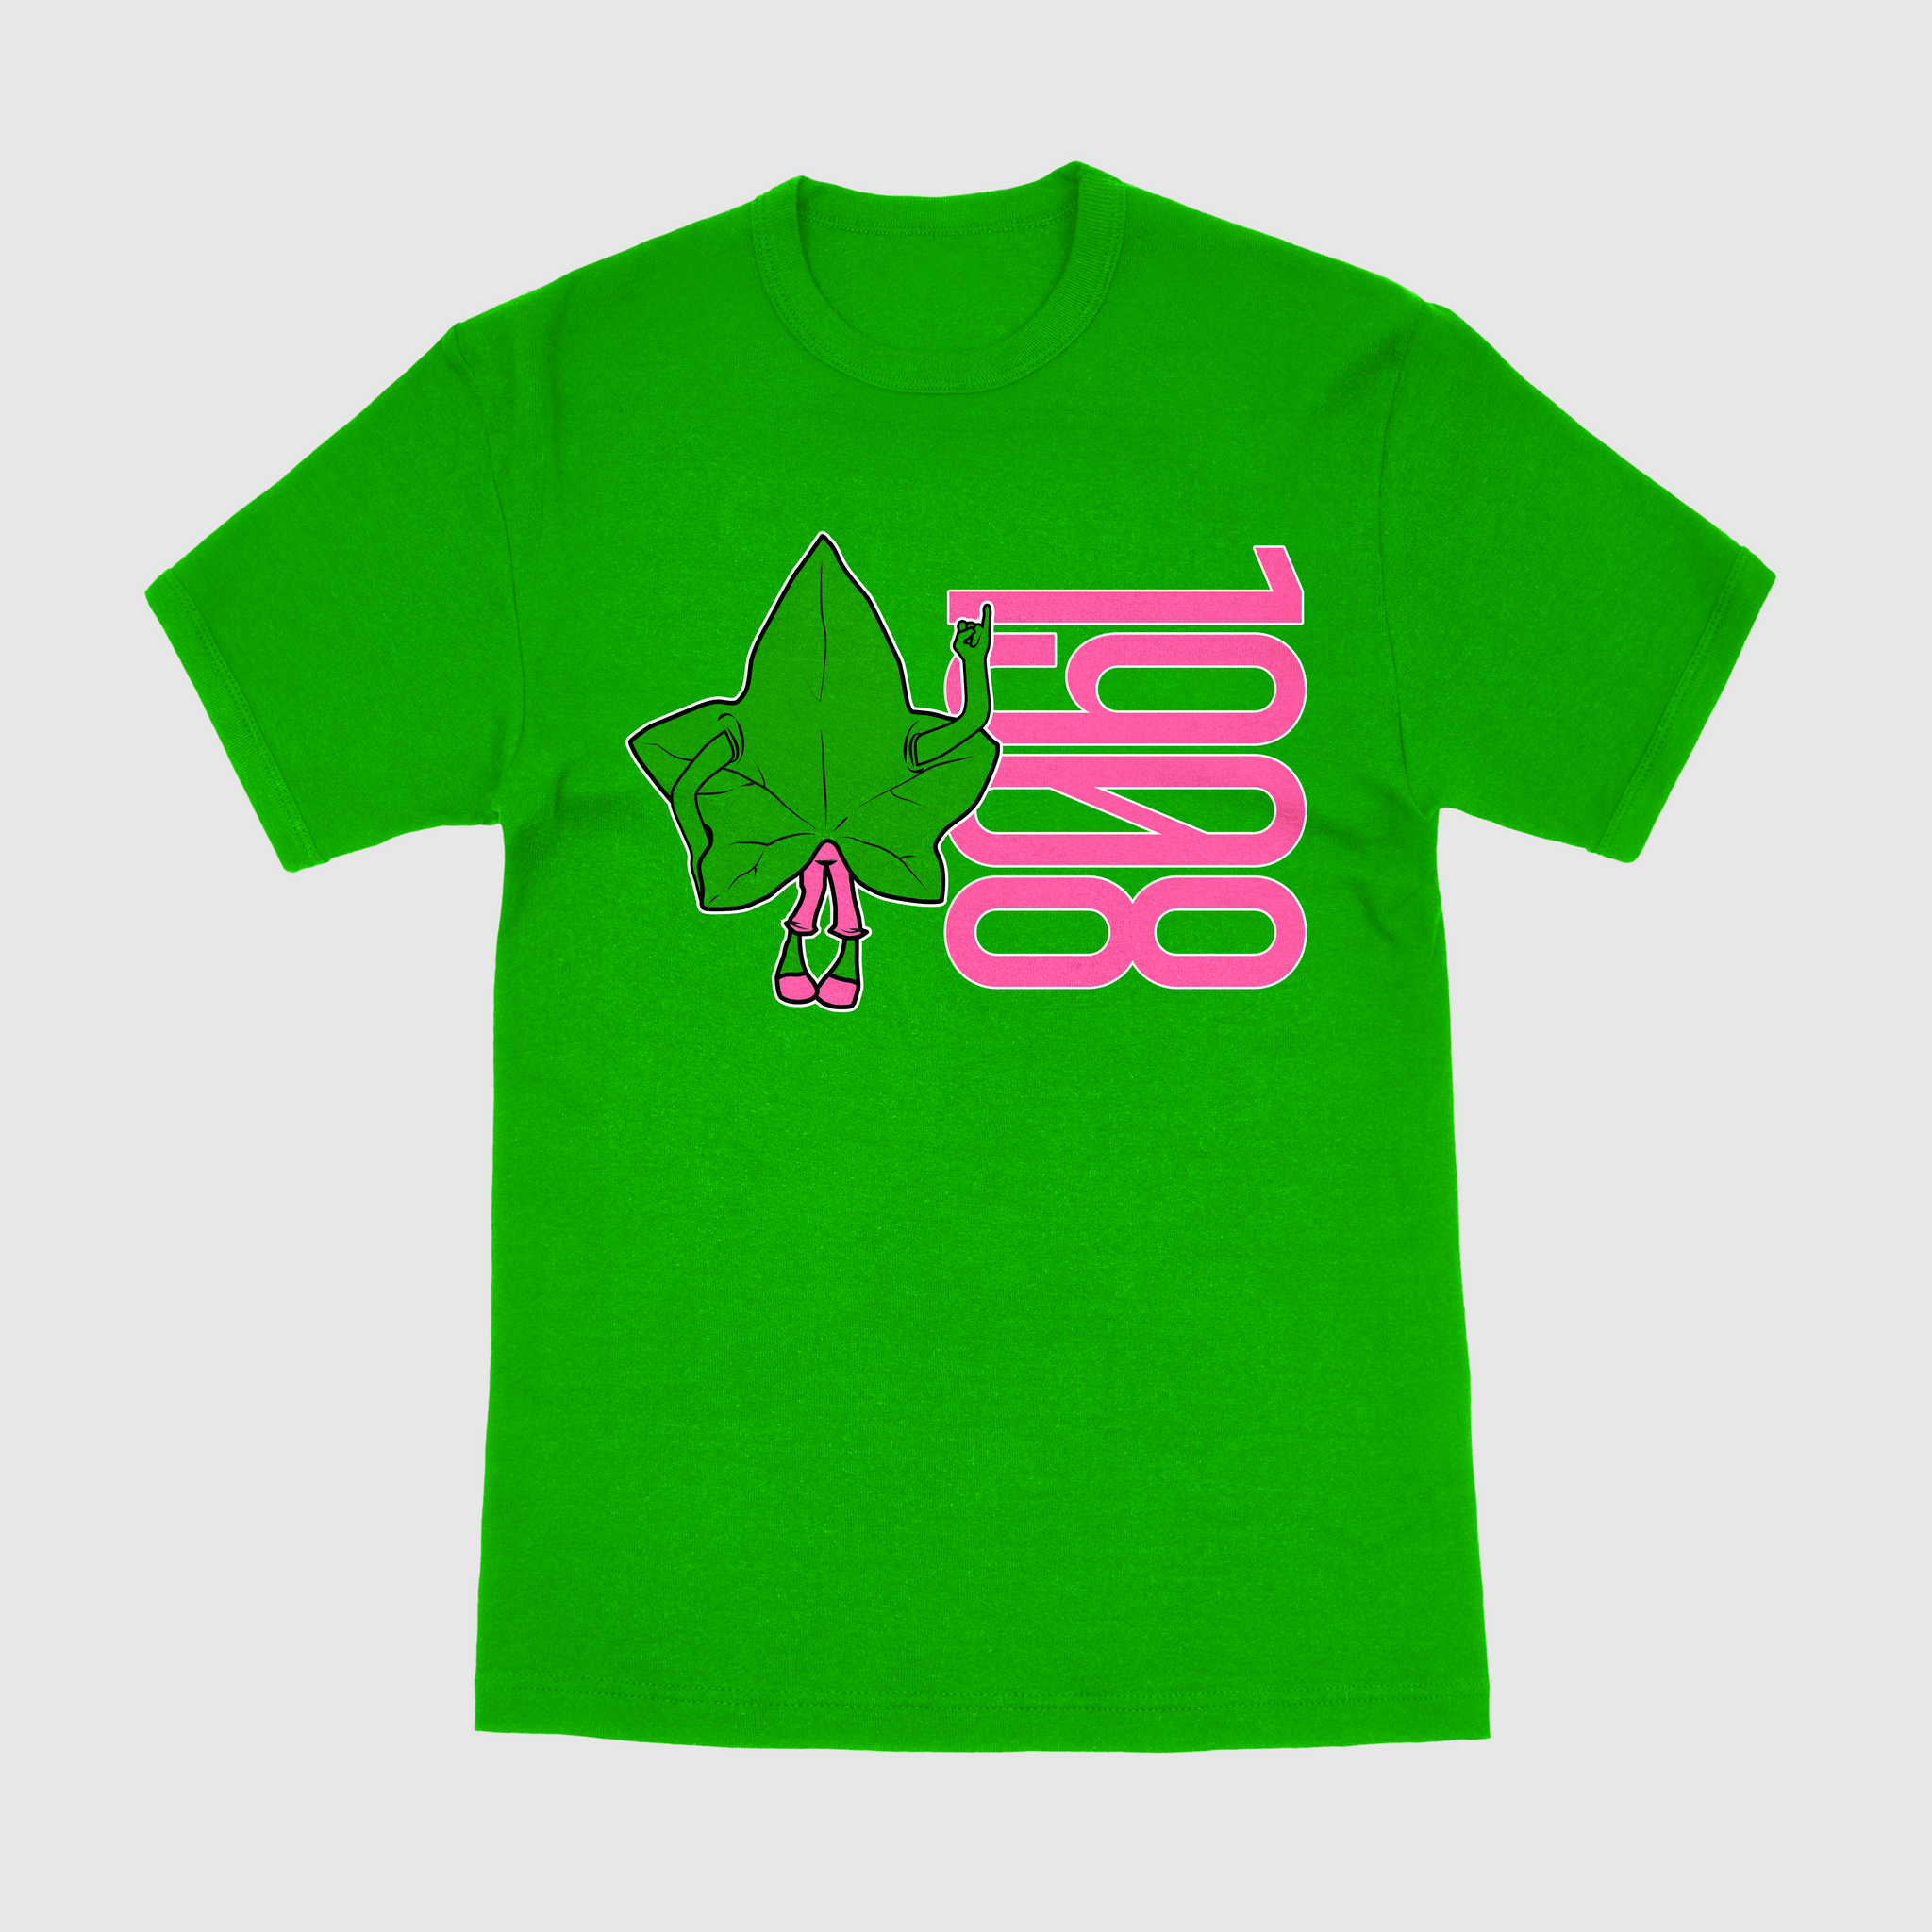 Green Pinkies Up T-Shirt